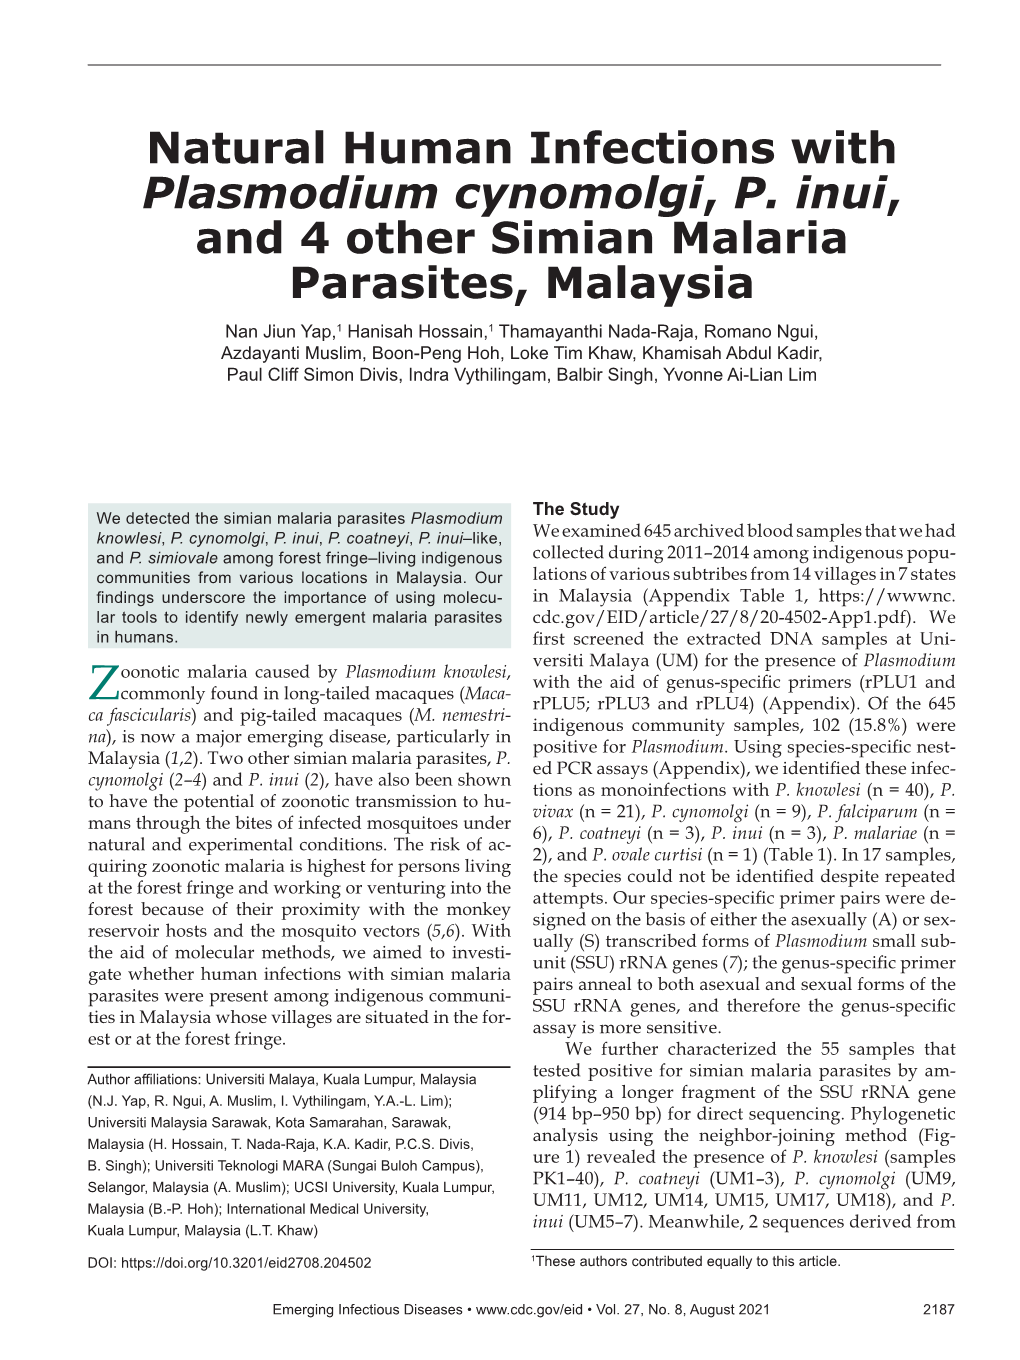 Natural Human Infections with Plasmodium Cynomolgi, P. Inui, And